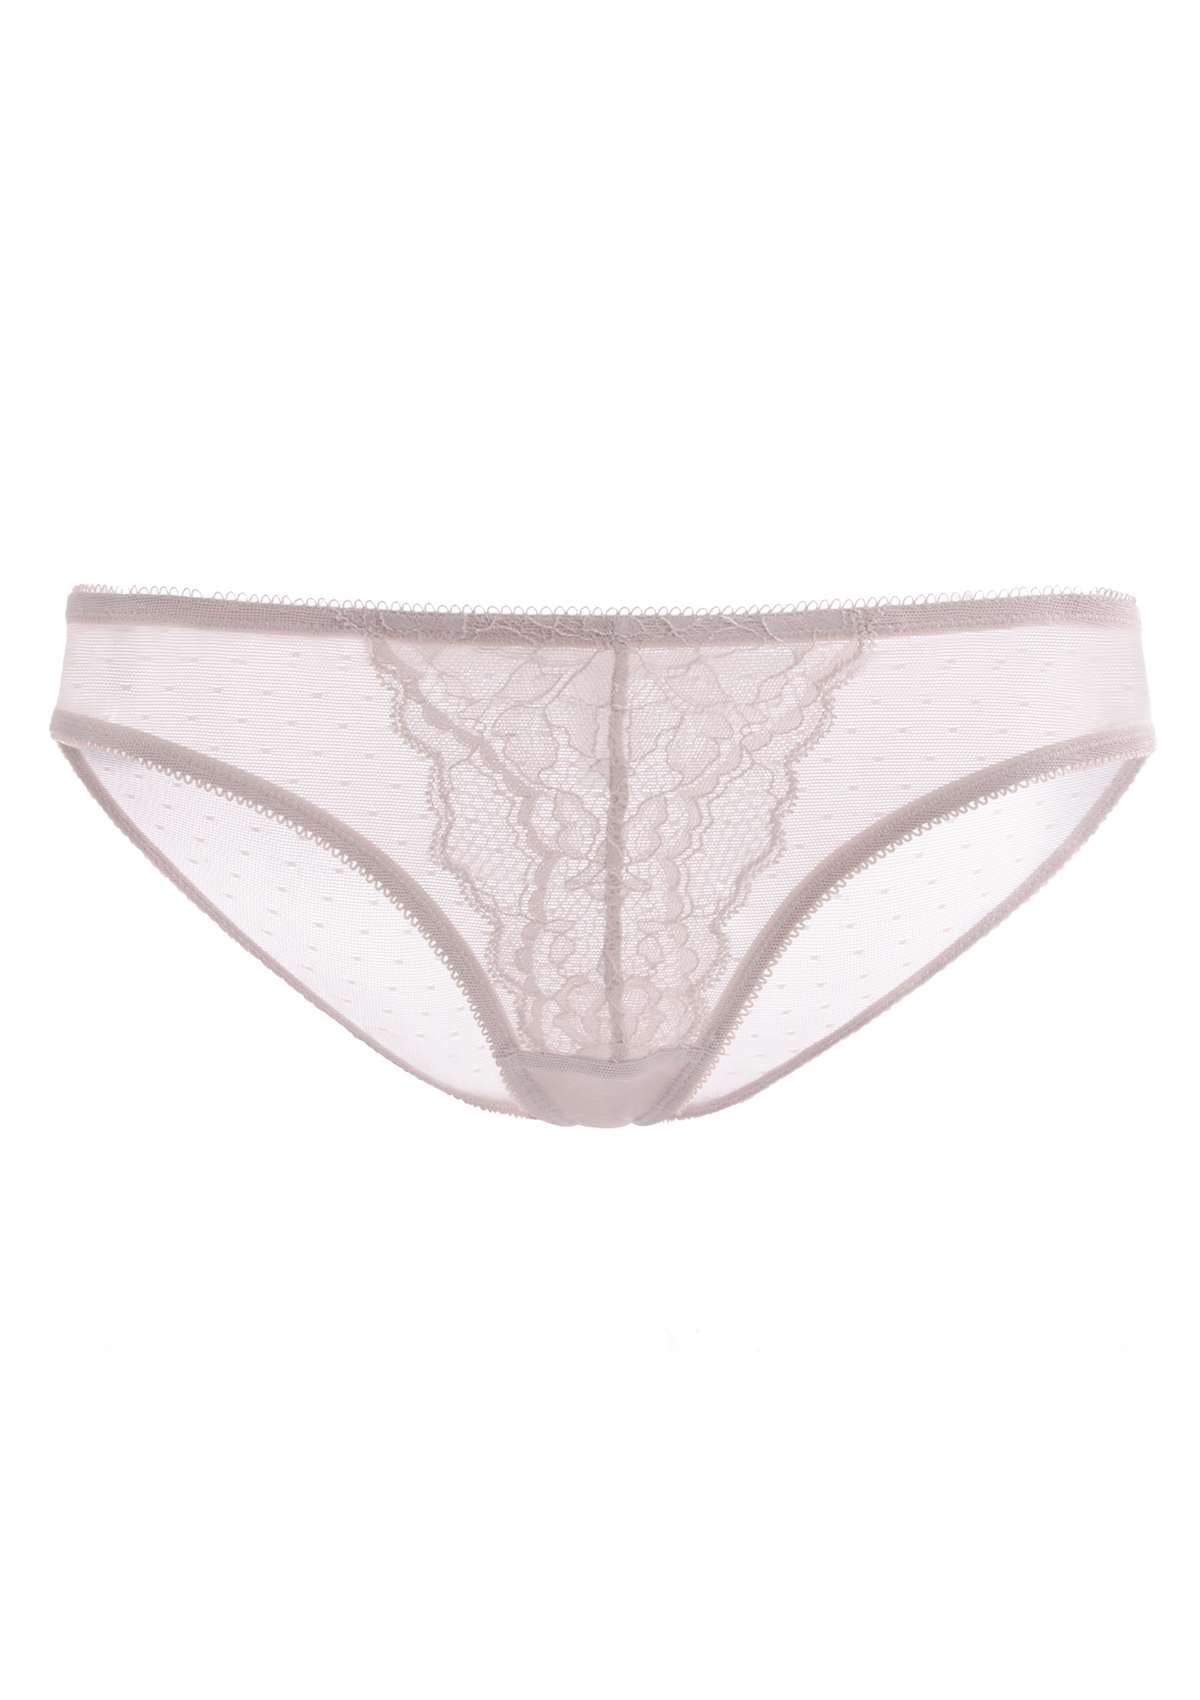 HSIA Enchante Sheer Lace Mesh Mid Rise Bikini Underwear - M / Dark Pink